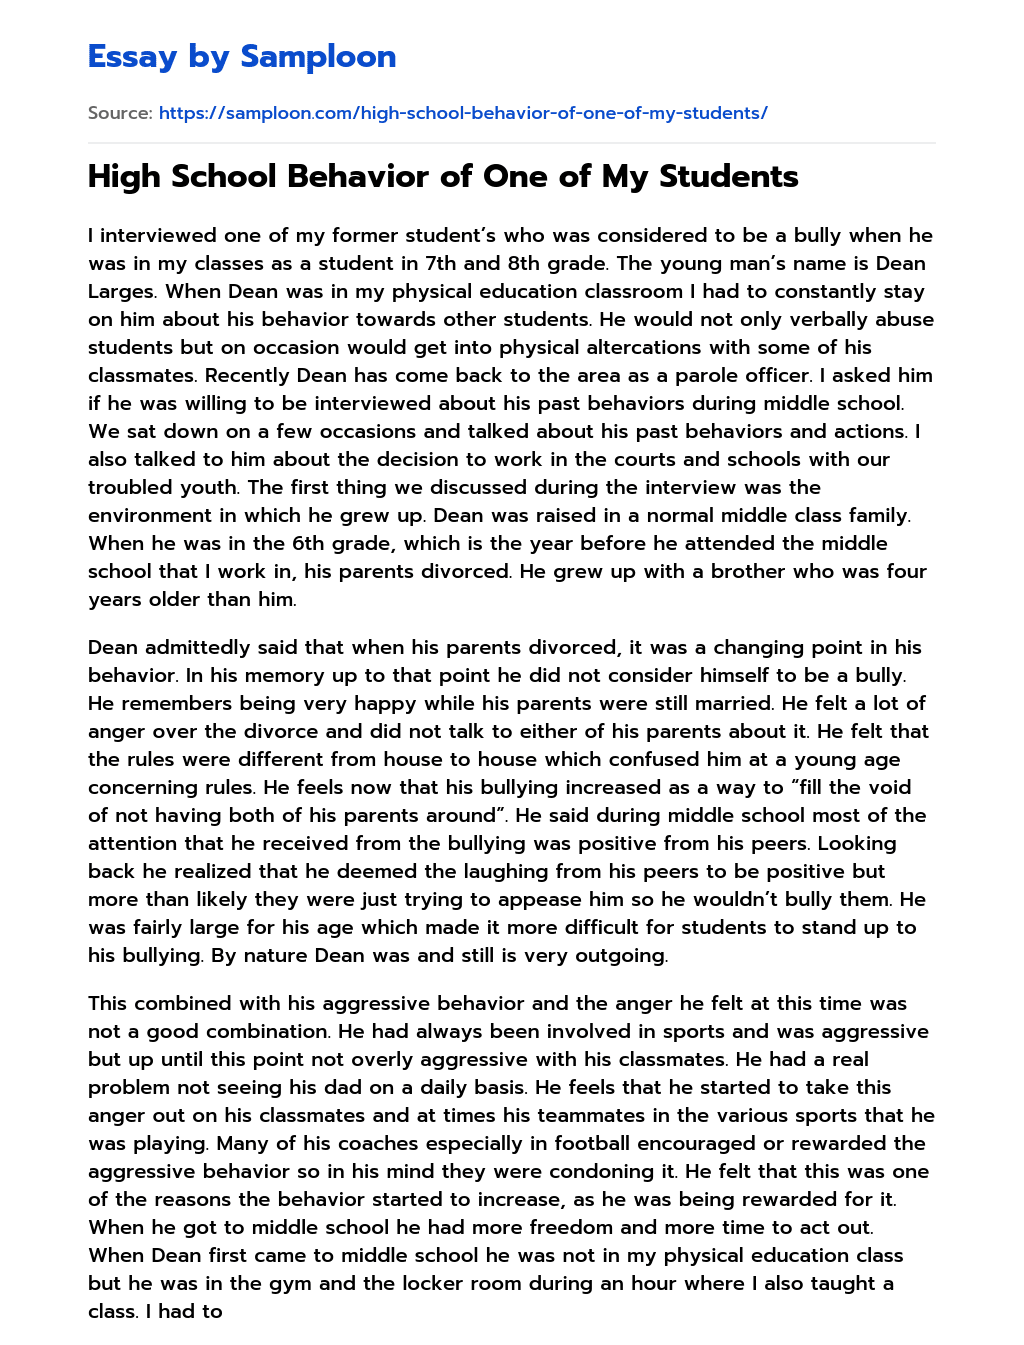 essay on behavior of student